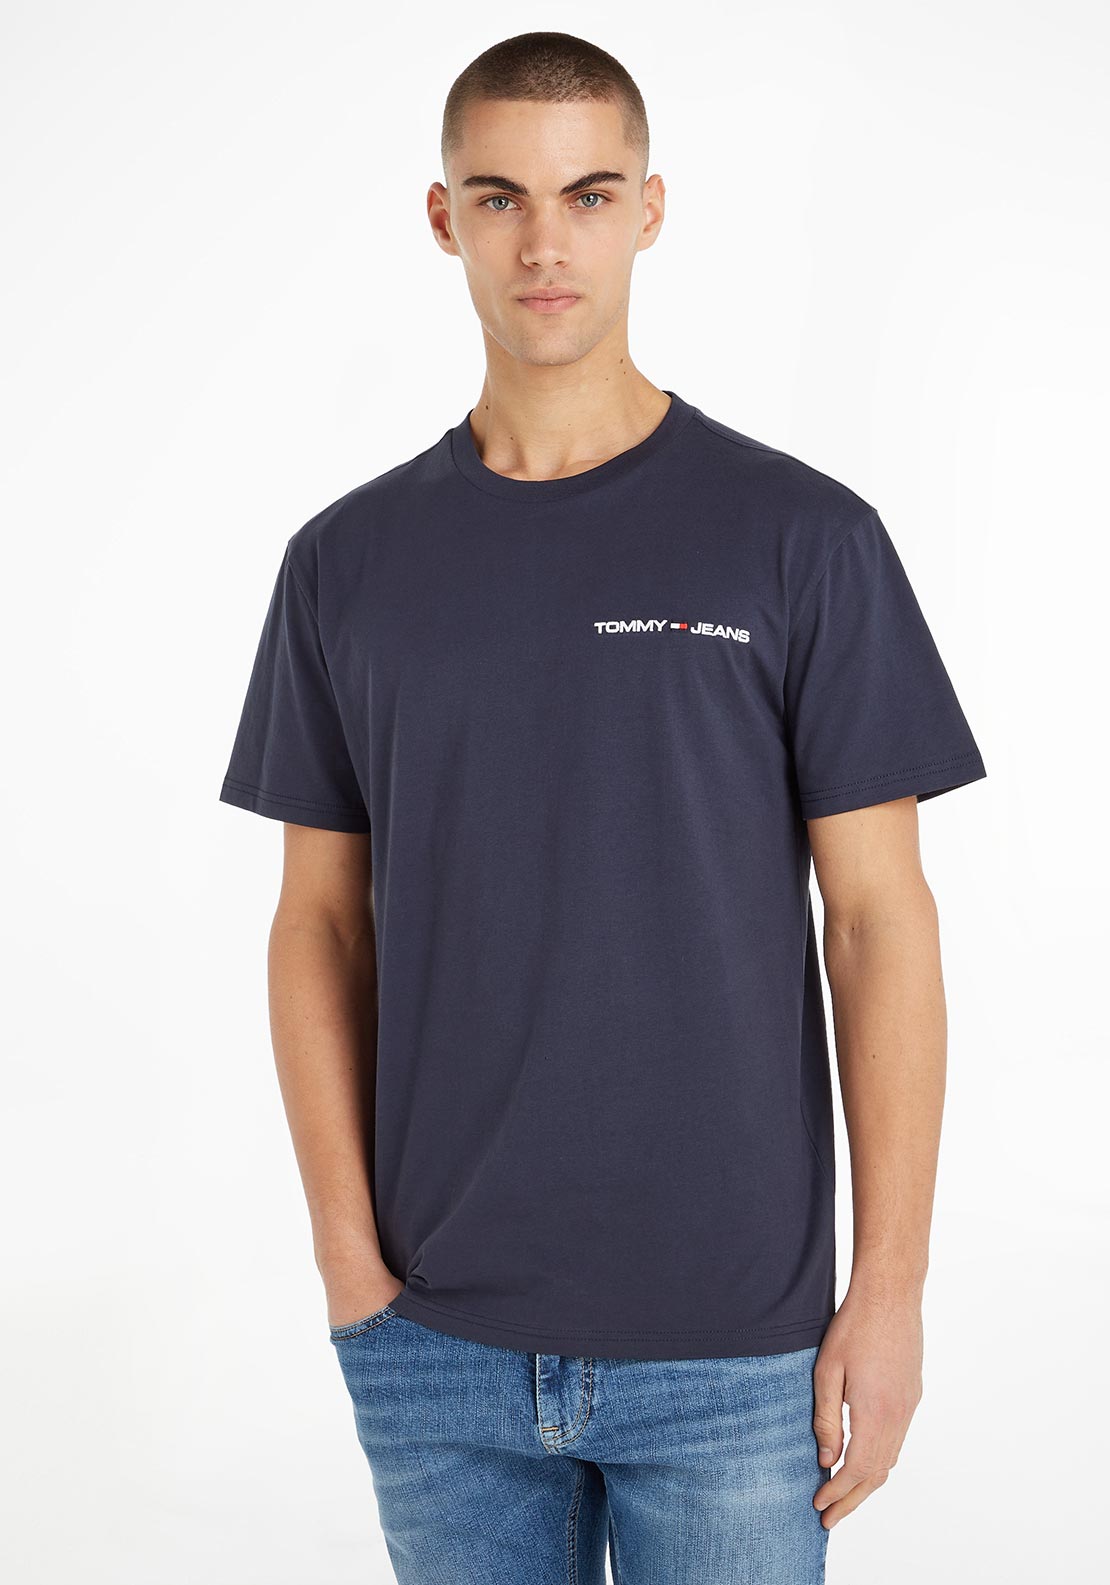 Tommy Jeans Classic Linear Logo T-Shirt, Twilight Navy - McElhinneys